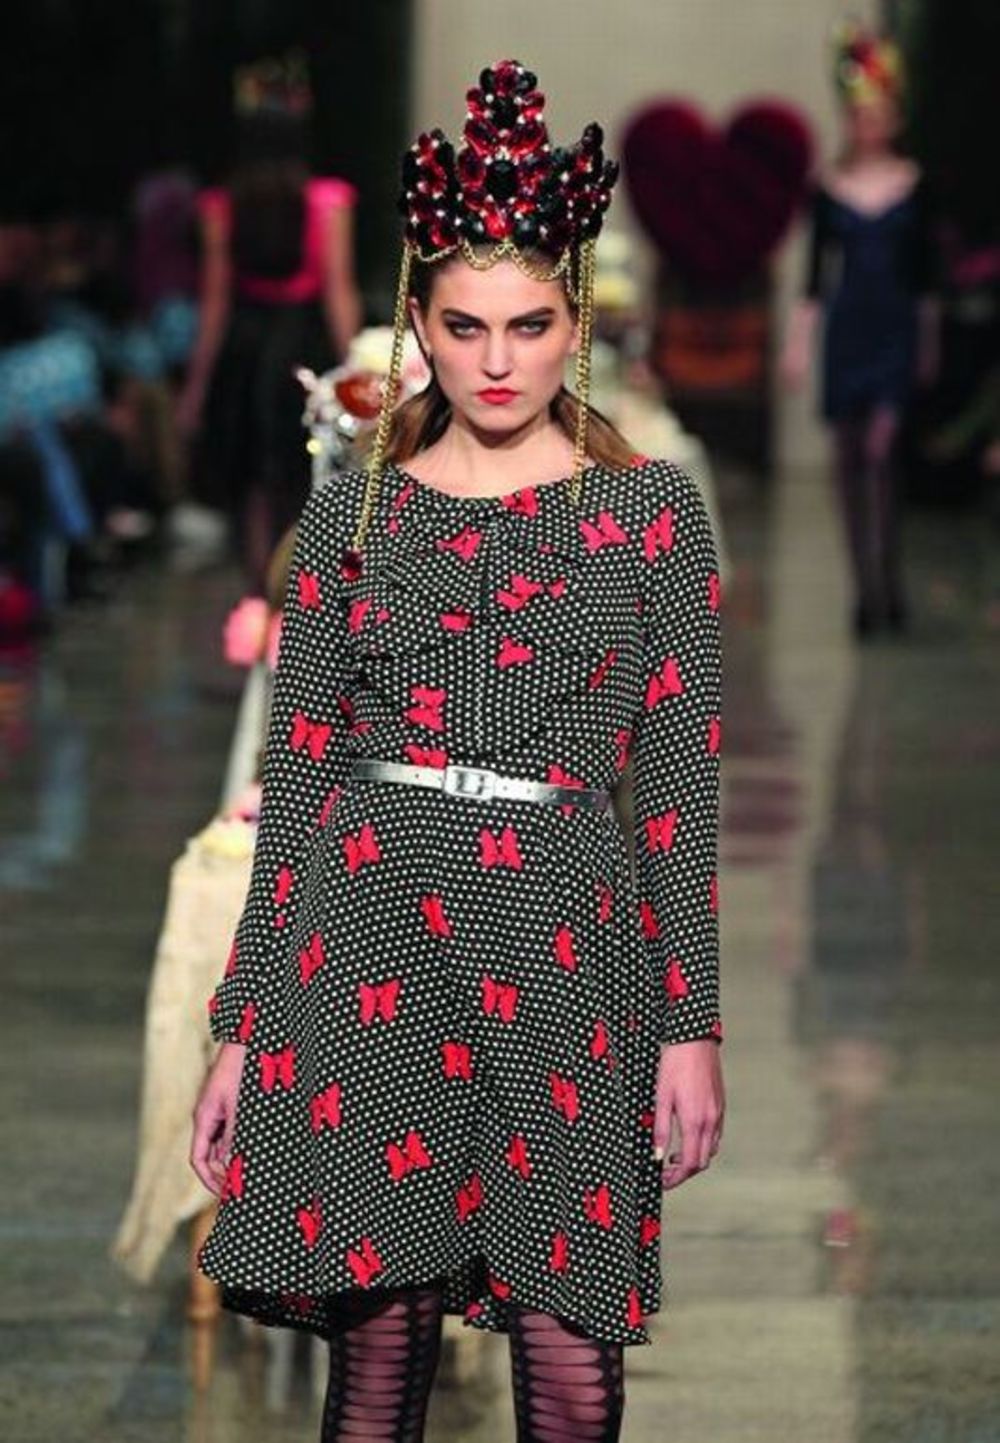 1.Nedelja mode na Novom Zelandu počela je 5. septembra revijom Ane Streton. Revije za proleće leto sledeće sezone predstavile su vedre boje i cvetne motive kao obavezni detalj. 
2.Ana  Streton, jedan od najpoznatijih lokalnih dizajnera, dobila je samo reči